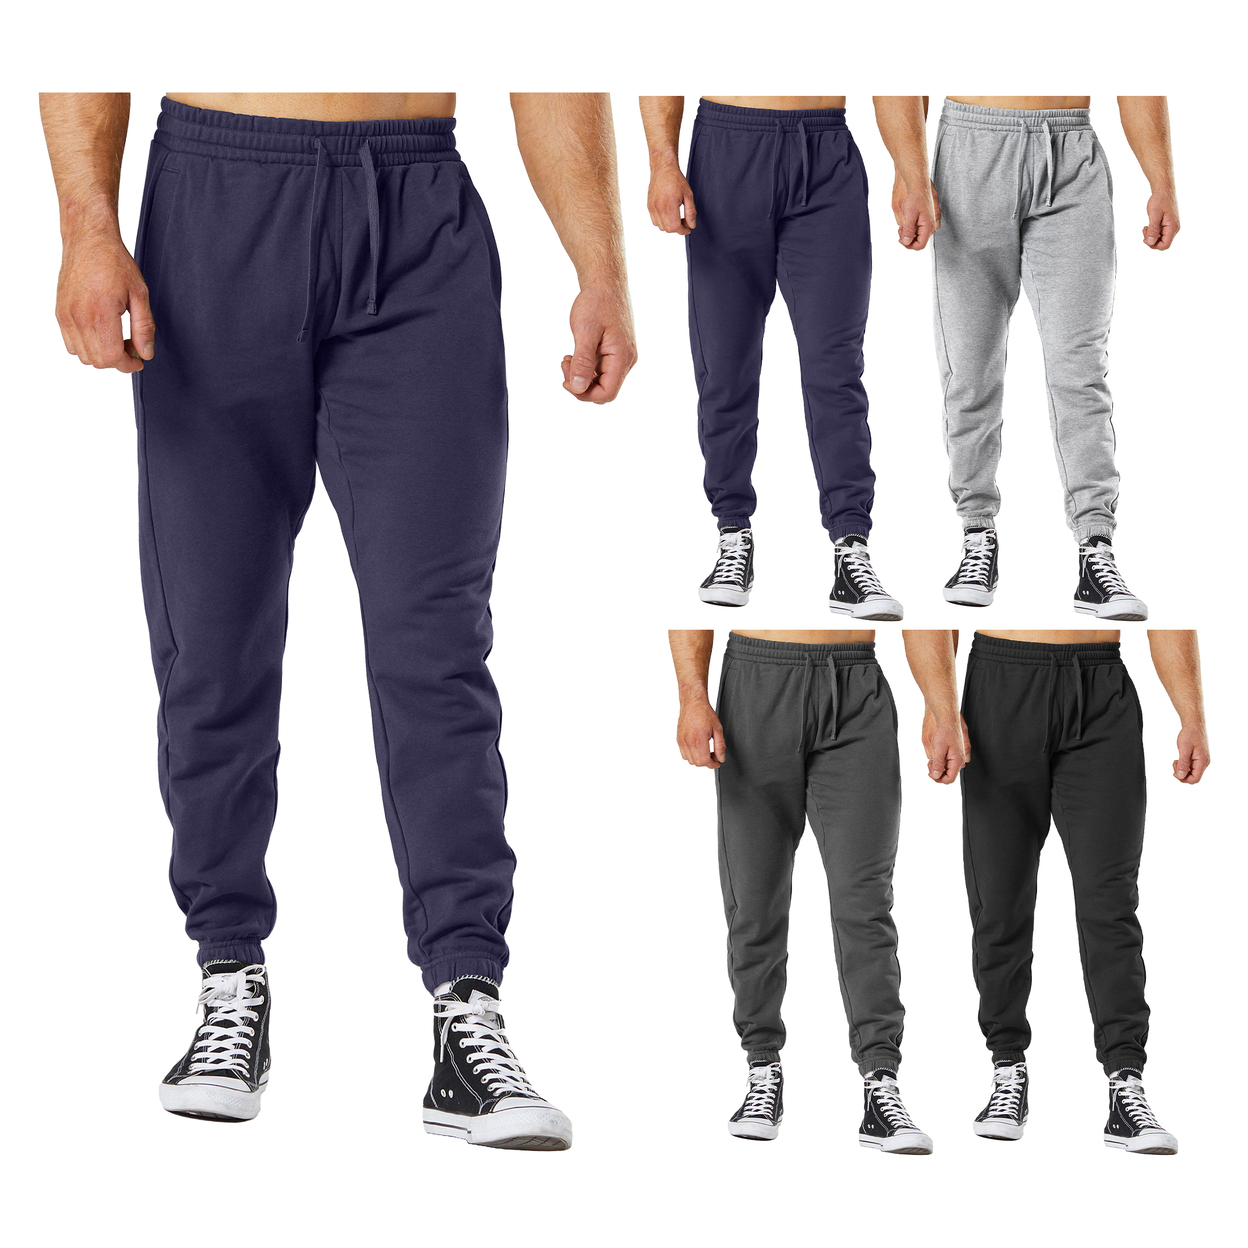 2-Pack: Men's Ultra-Soft Cozy Winter Warm Casual Fleece-Lined Sweatpants Jogger - Black & Black, Large